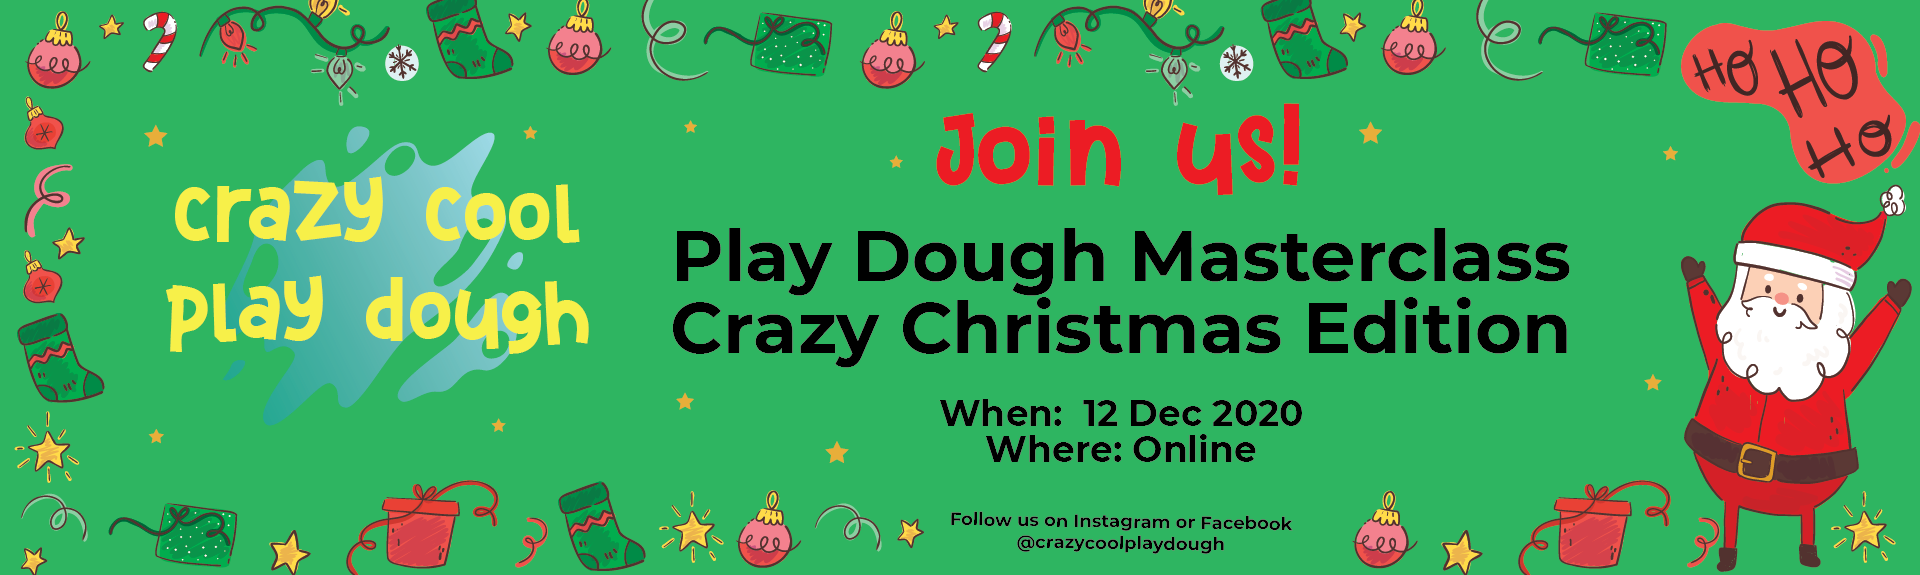 Play Dough Masterclass - Crazy Christmas Edition